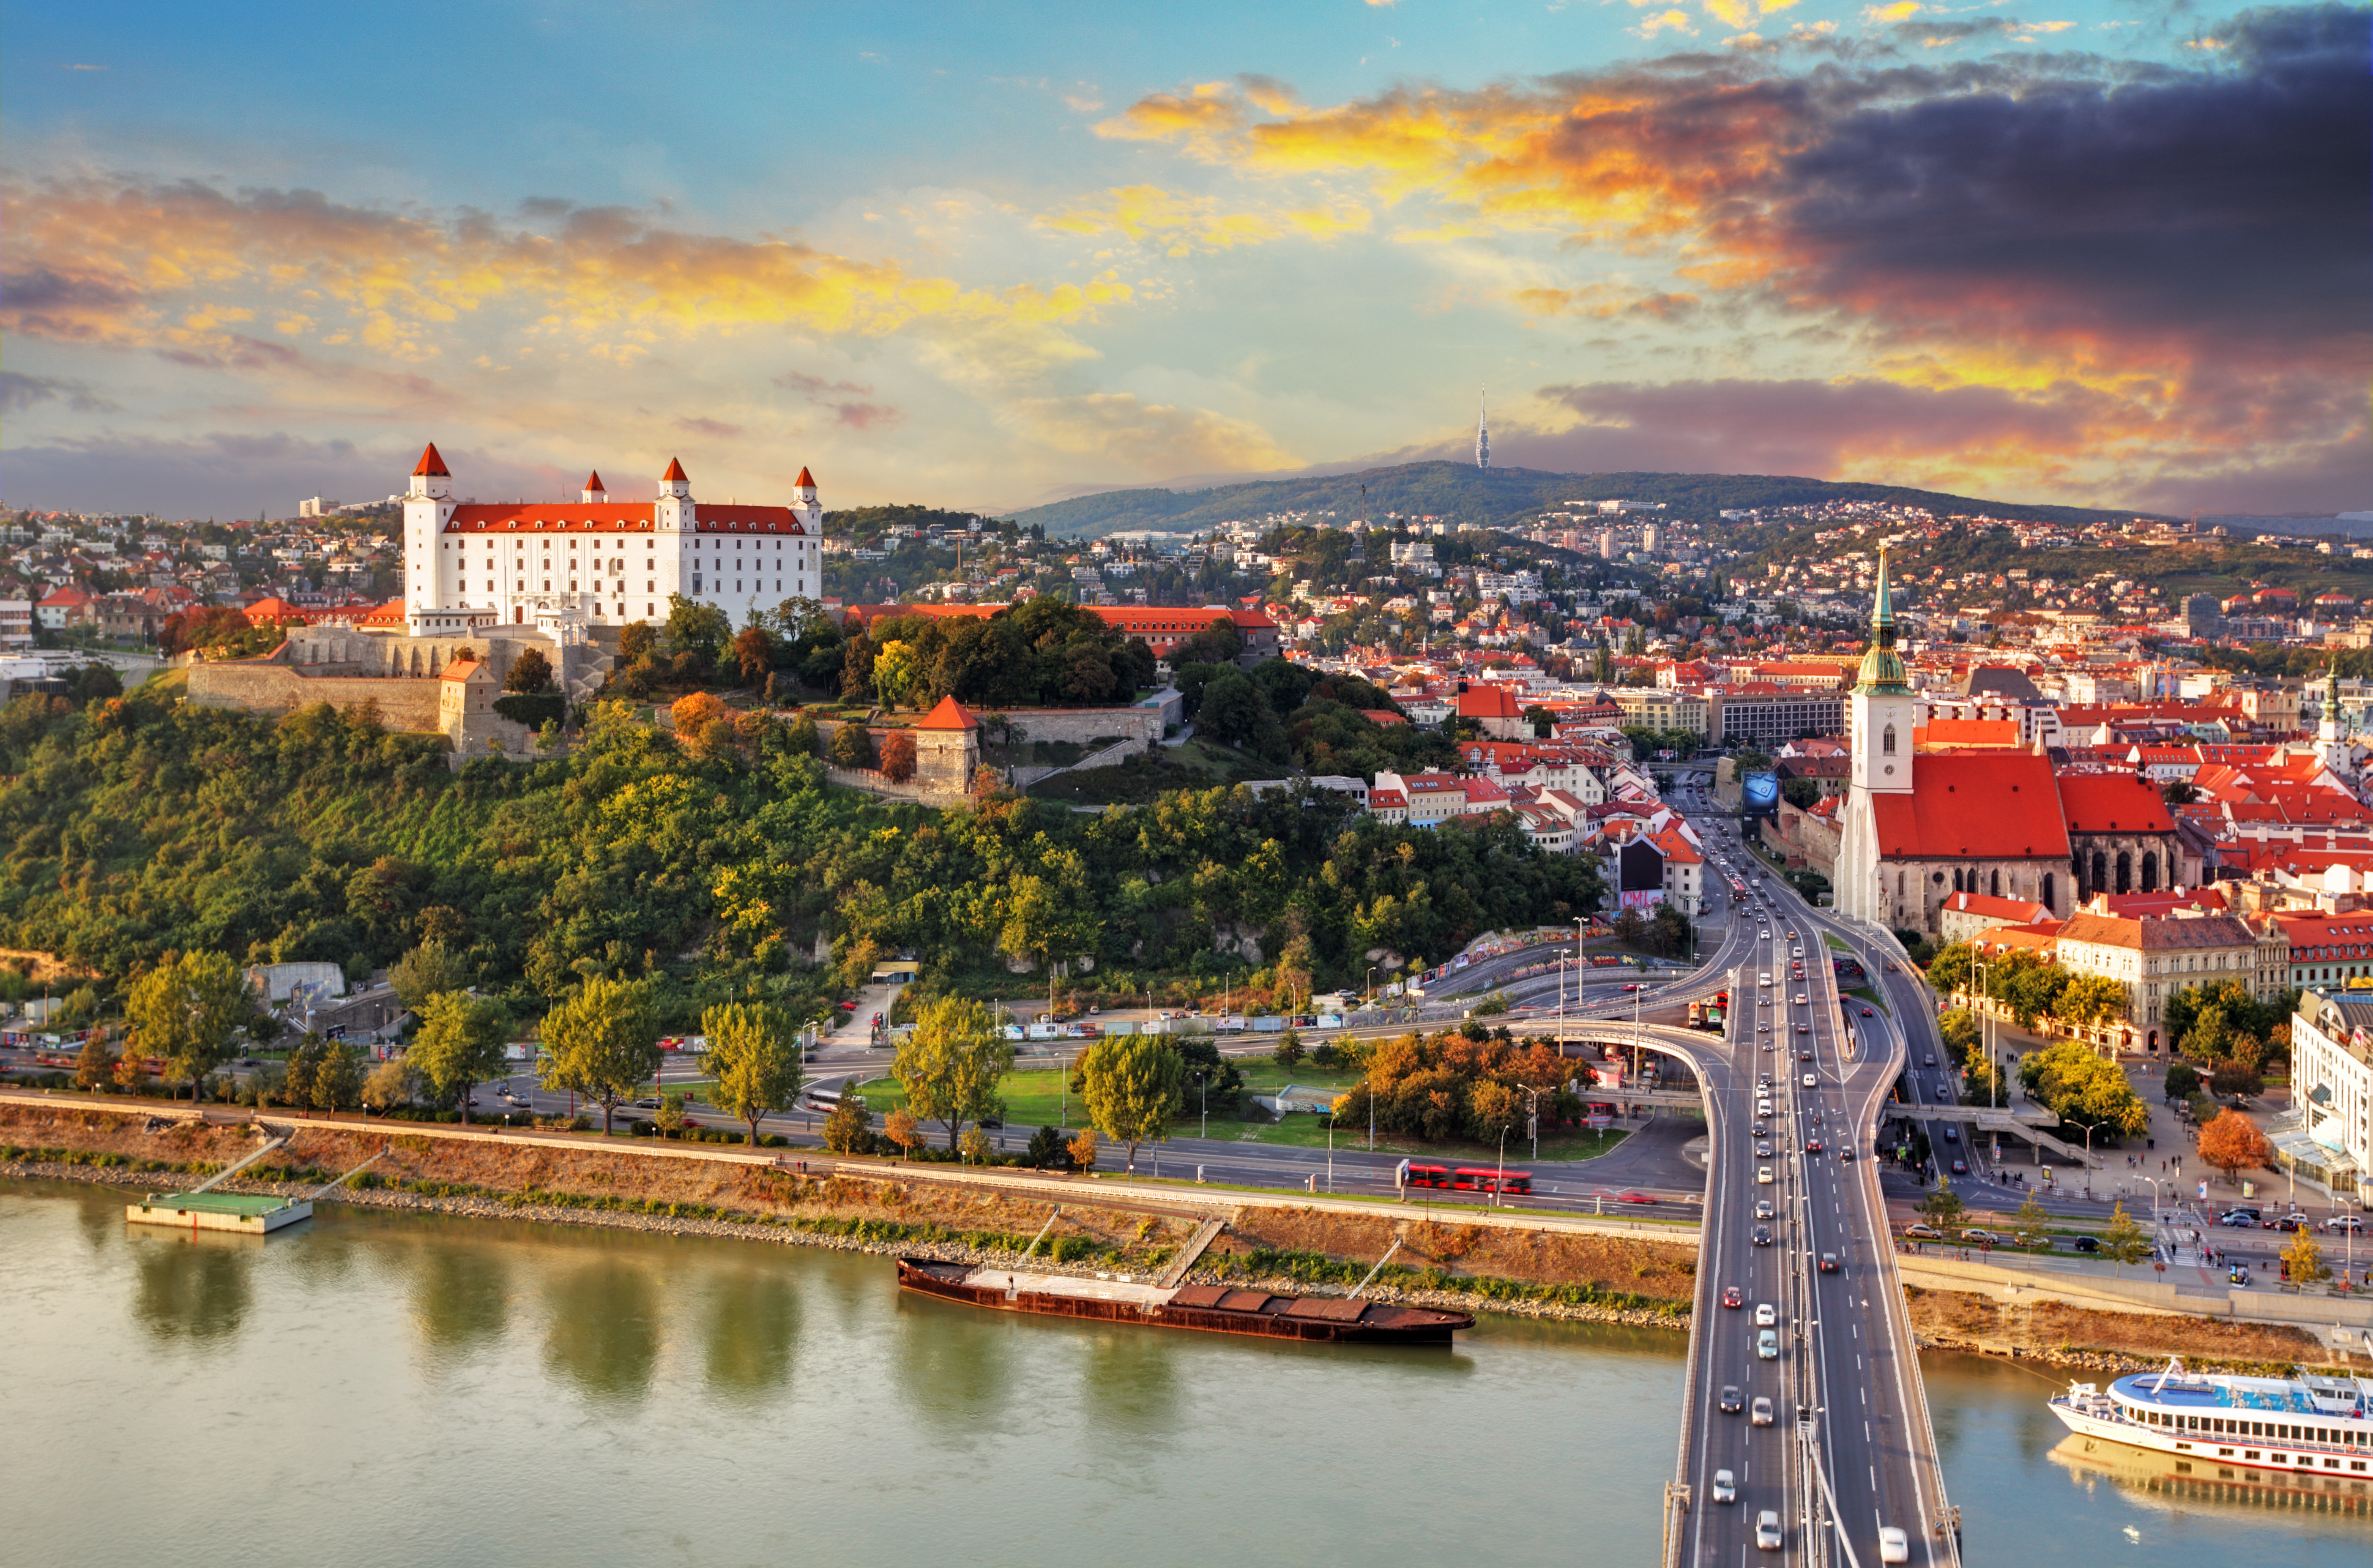 Bratislava, Slovakia, Catle, priate transfer, history tour, sight